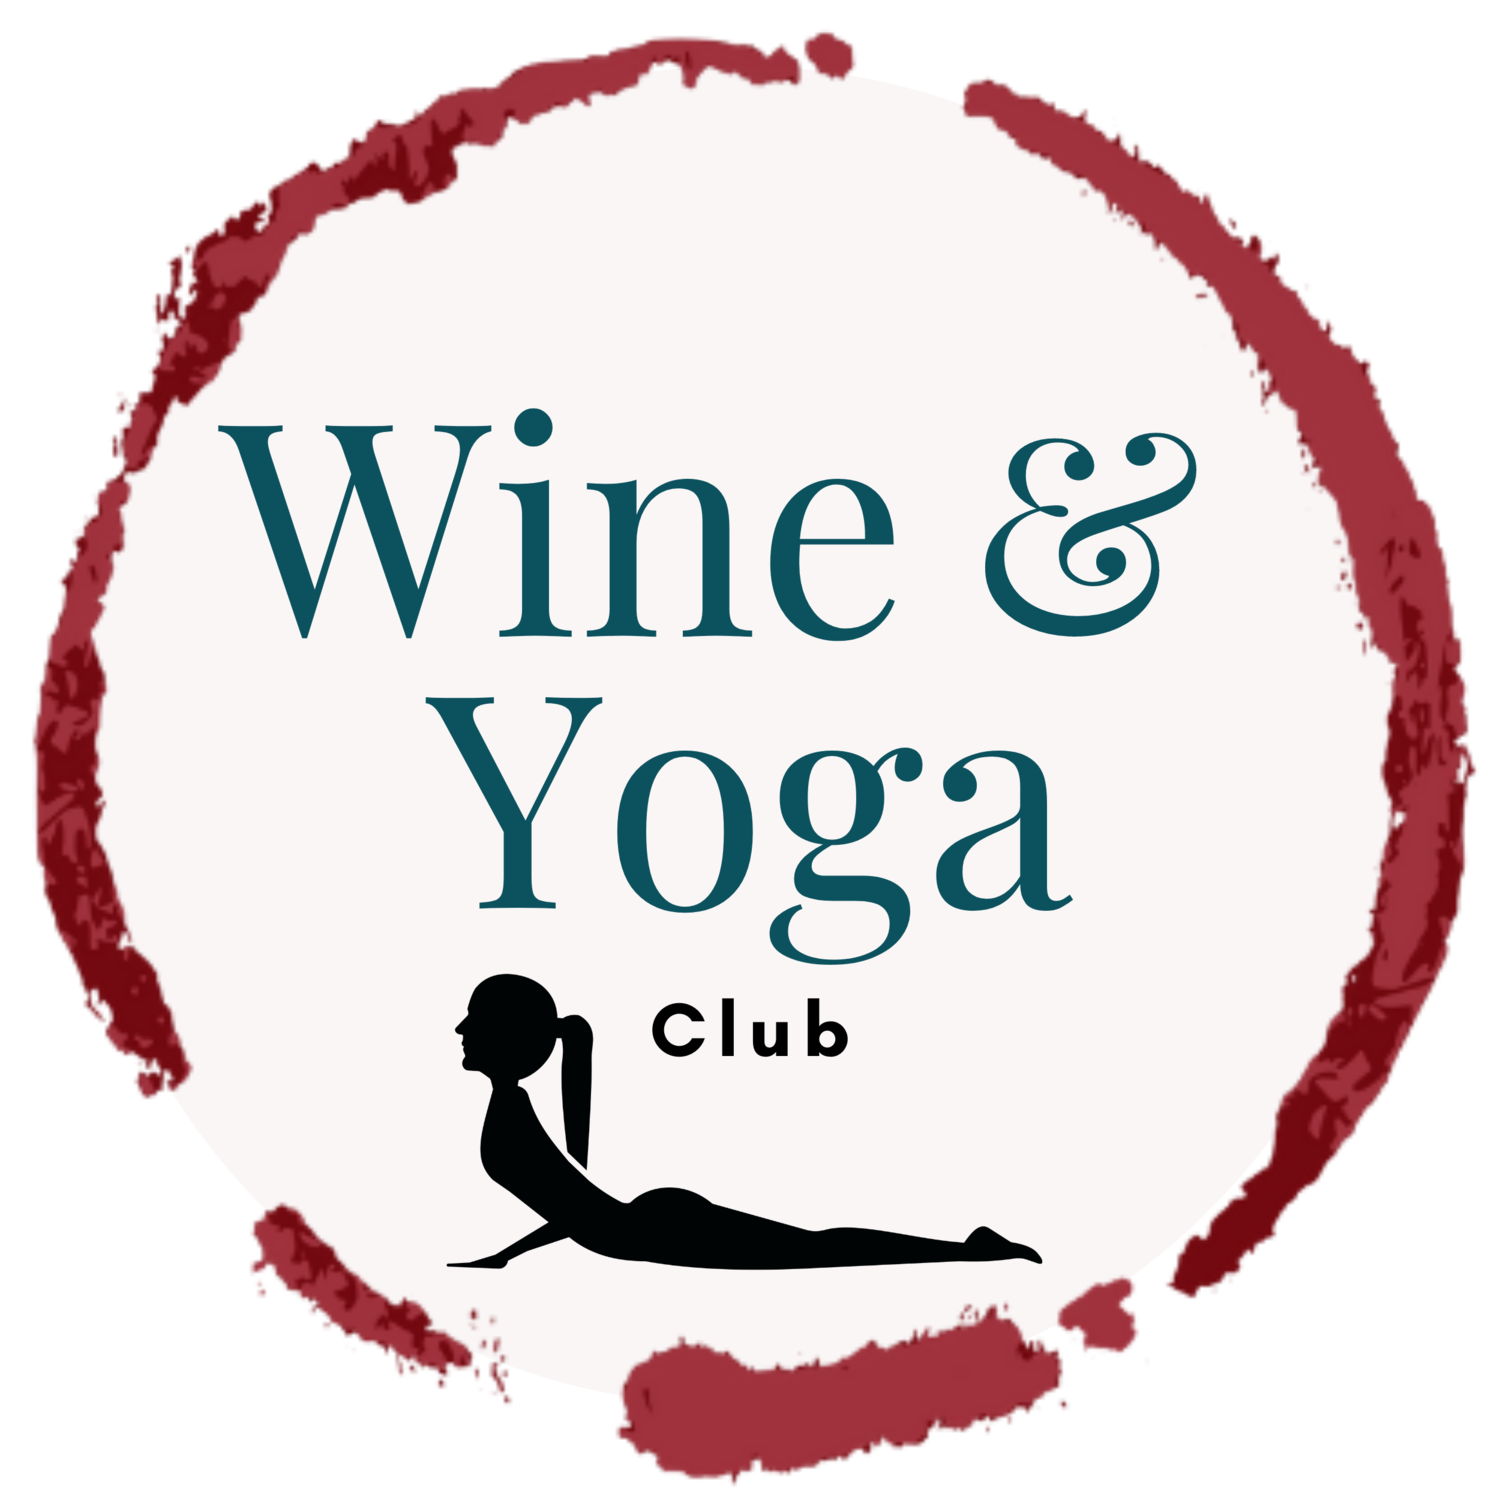 Wine and Yoga Club